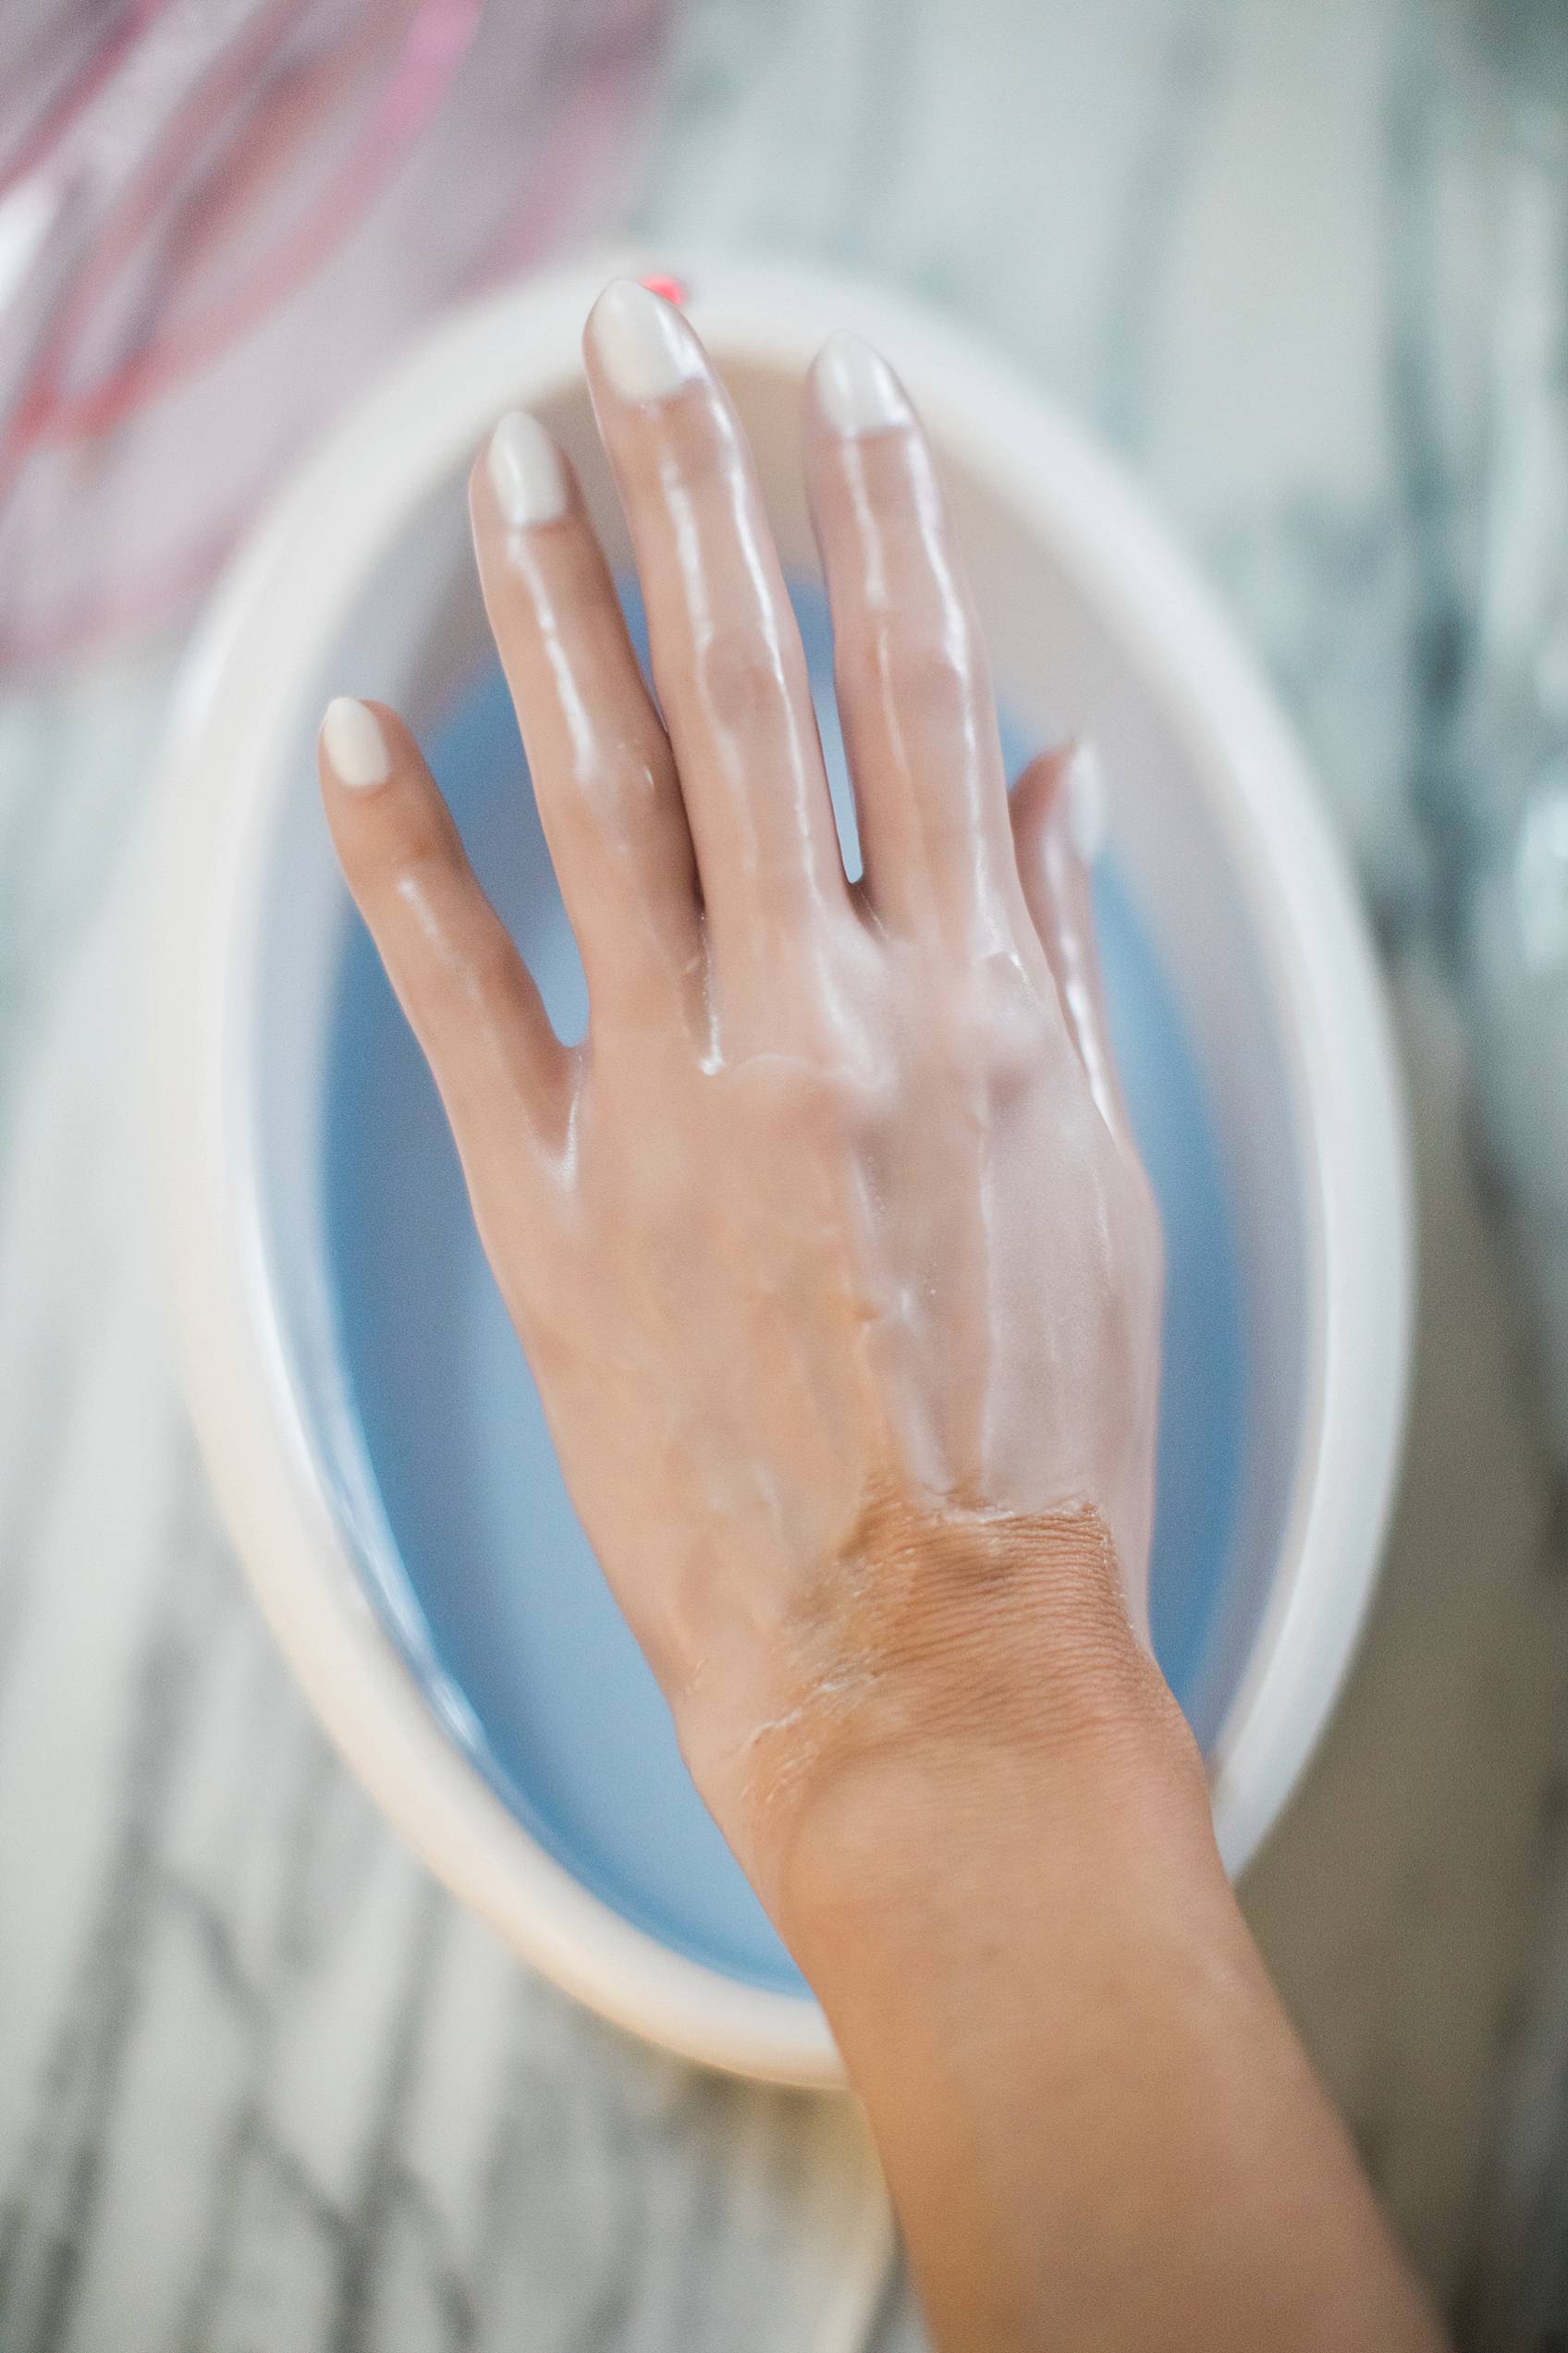 At home paraffin wax bath - Diana Elizabeth